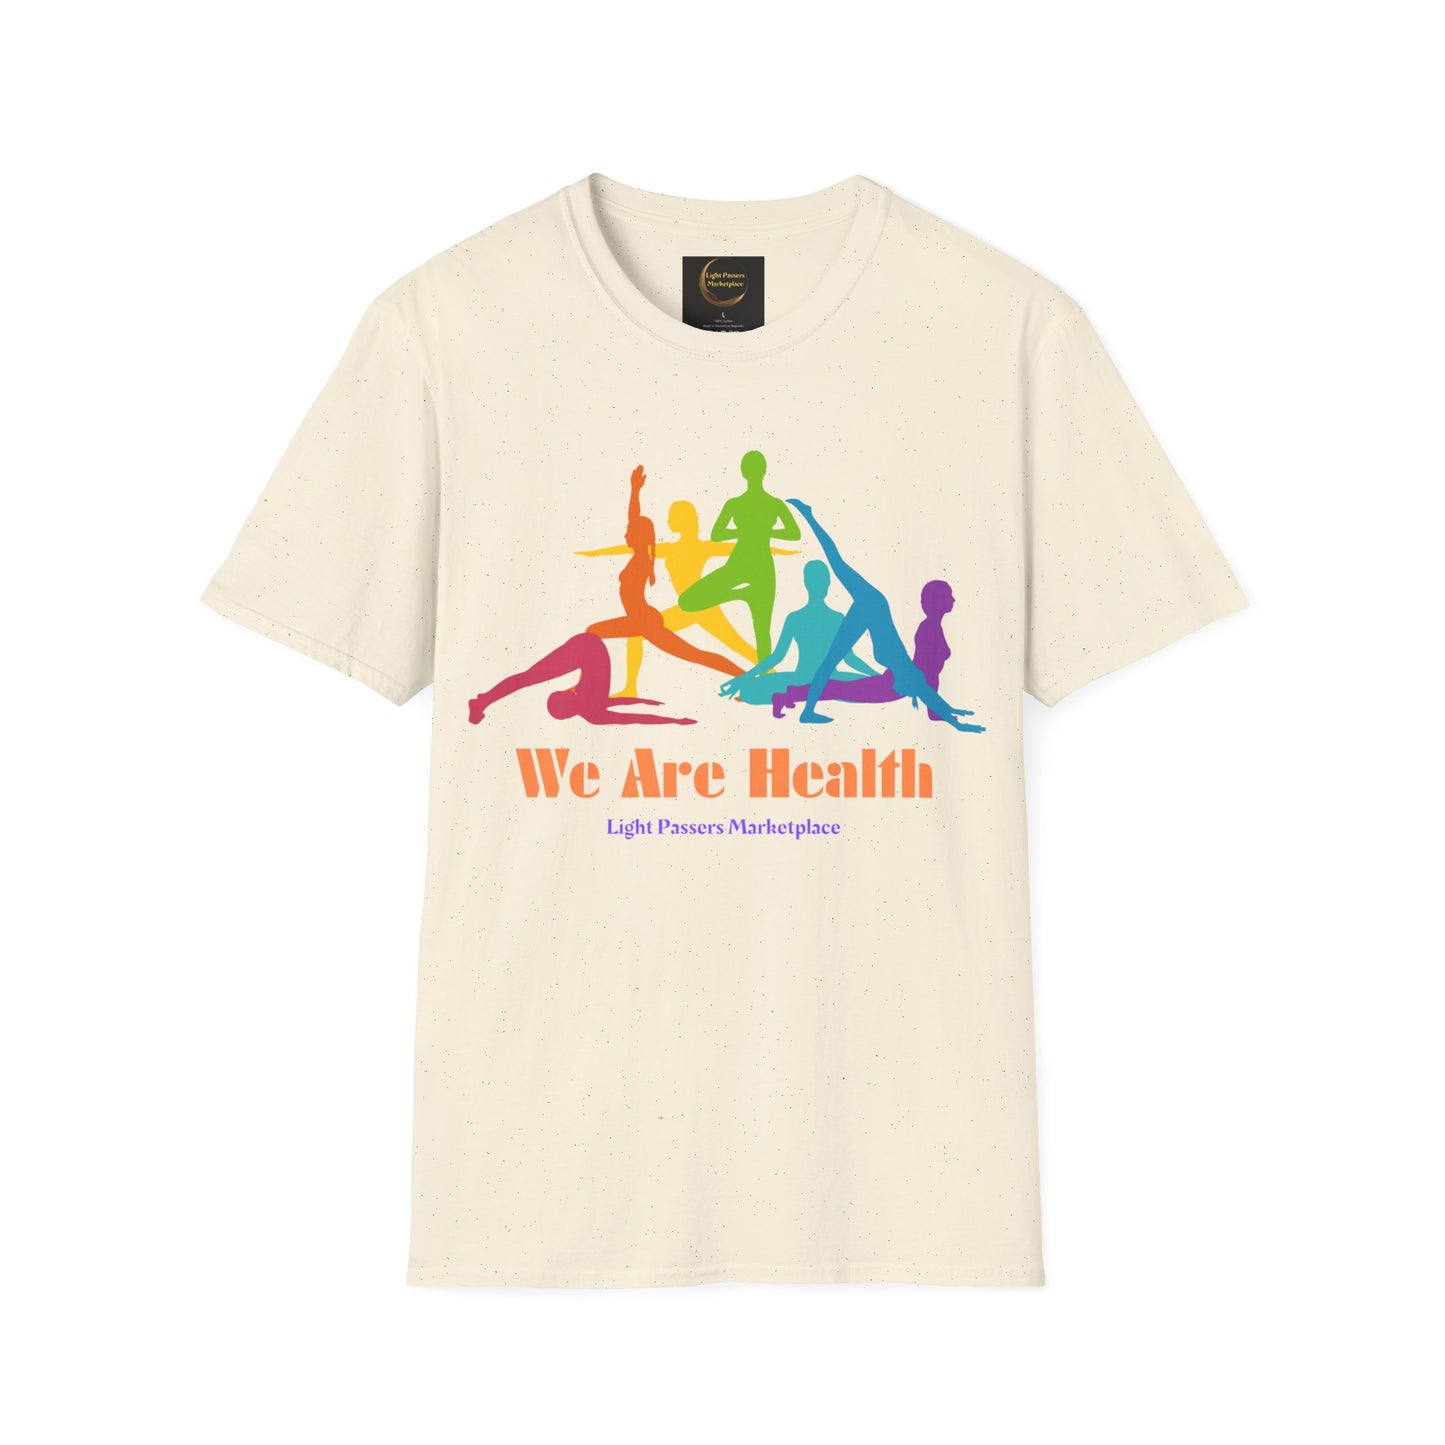 Light Passers Marketplace Yoga Class Unisex Soft T-Shirt Fitness, Mental Health, Diversity